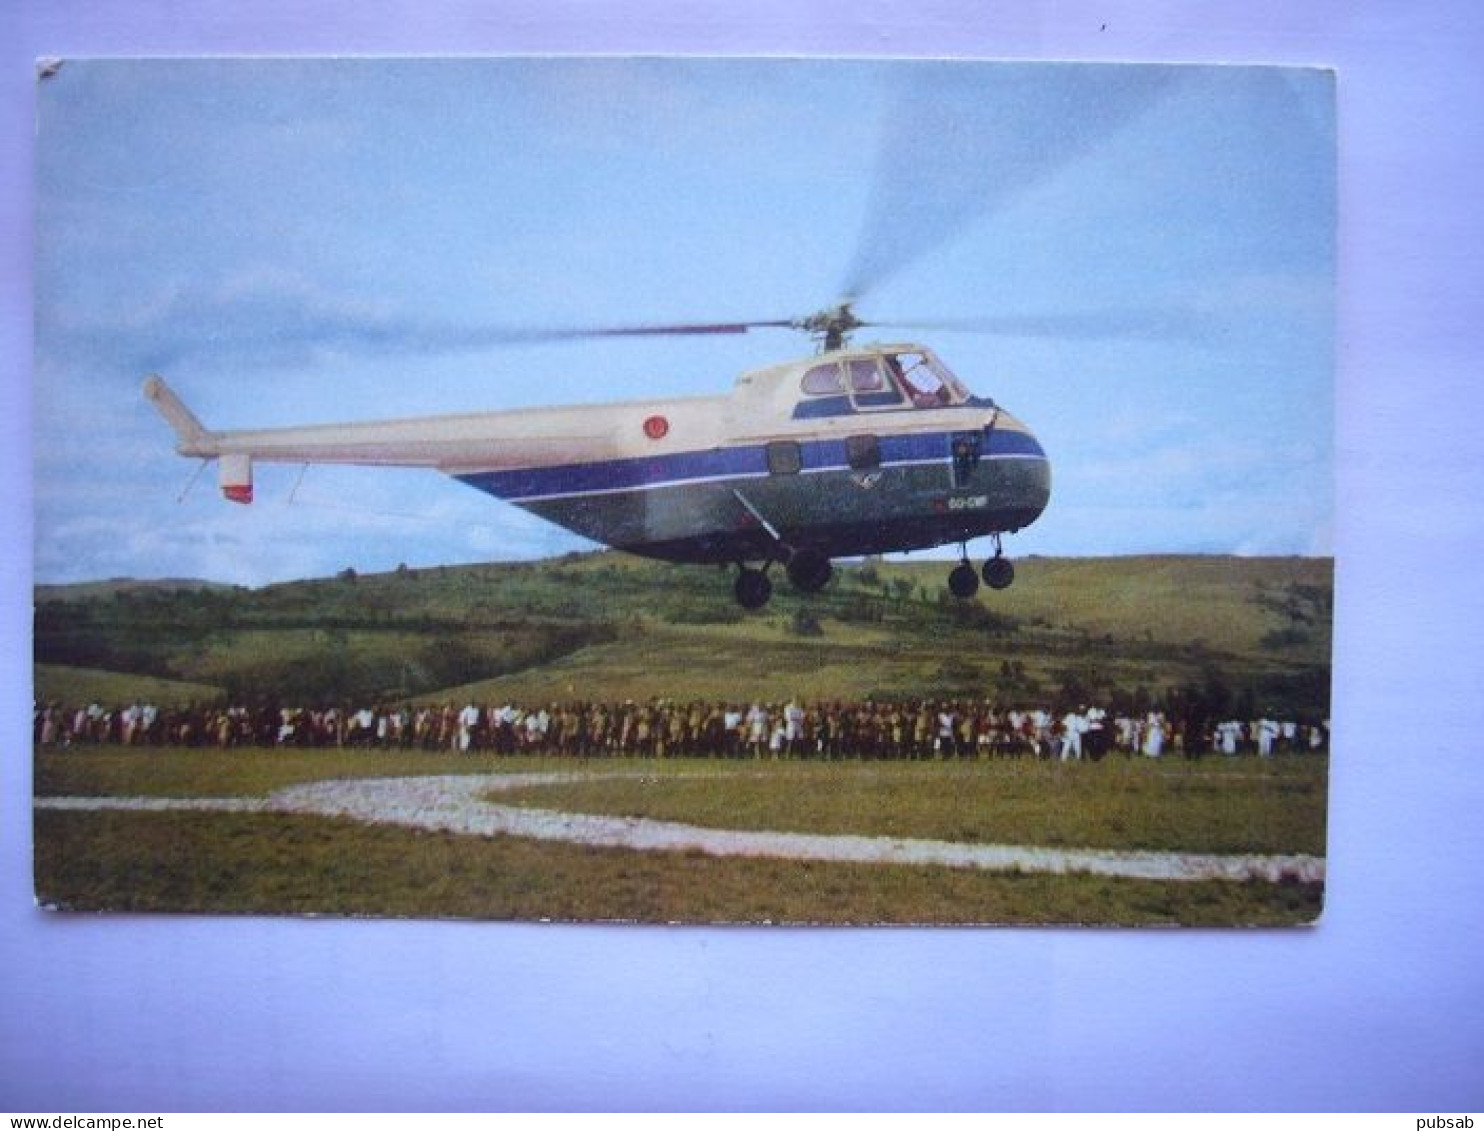 Avion / Airplane / SABENA / Helicopter / Sikorsky S-55 / OO-CWF / Seen At Kitega, Rwanda - Hubschrauber